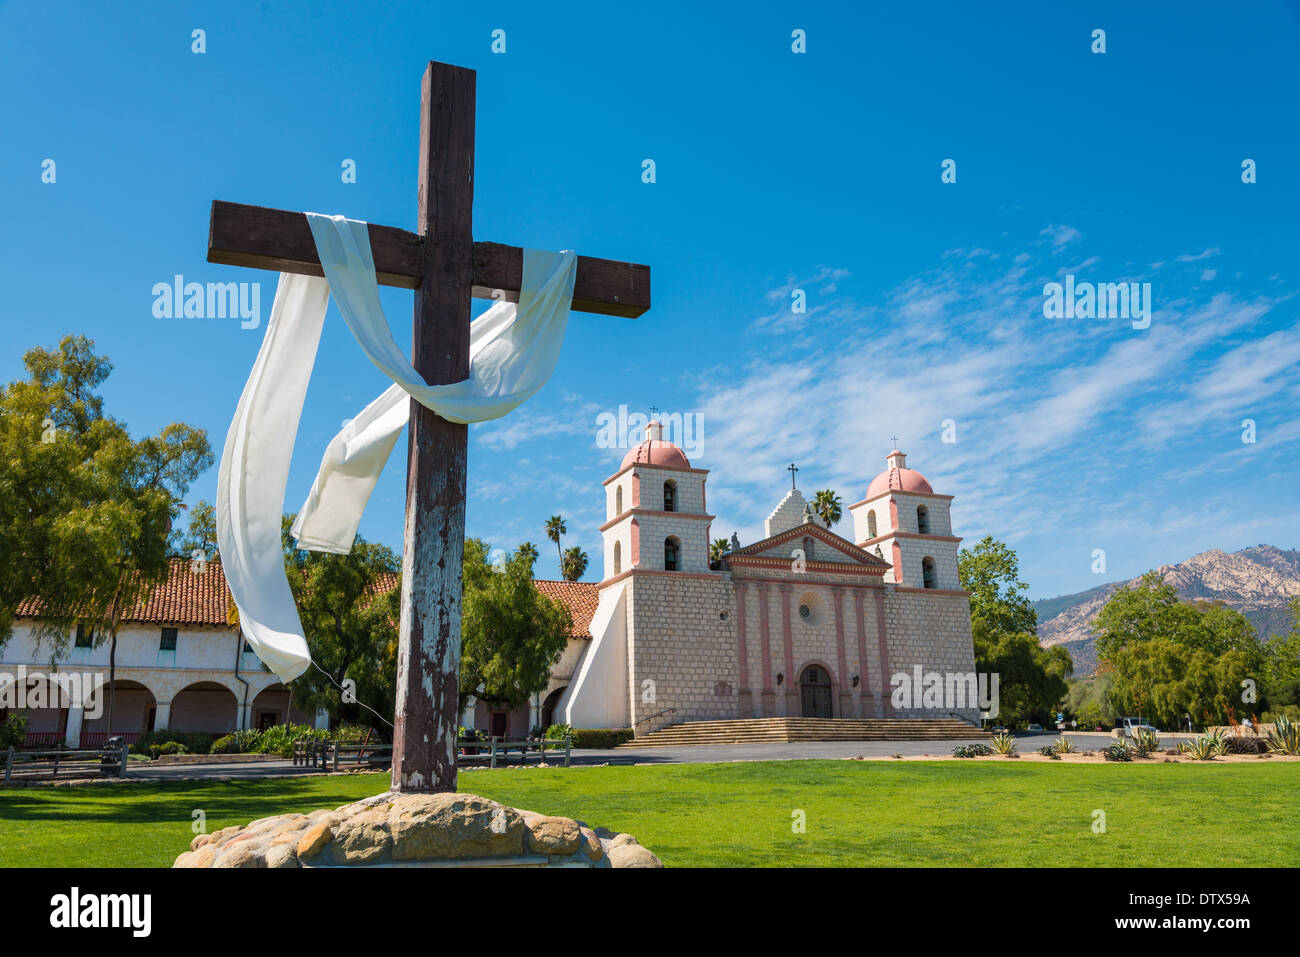 Mission Santa Barbara in Santa Barbara, California with a cross and a sky blue background Stock Photo